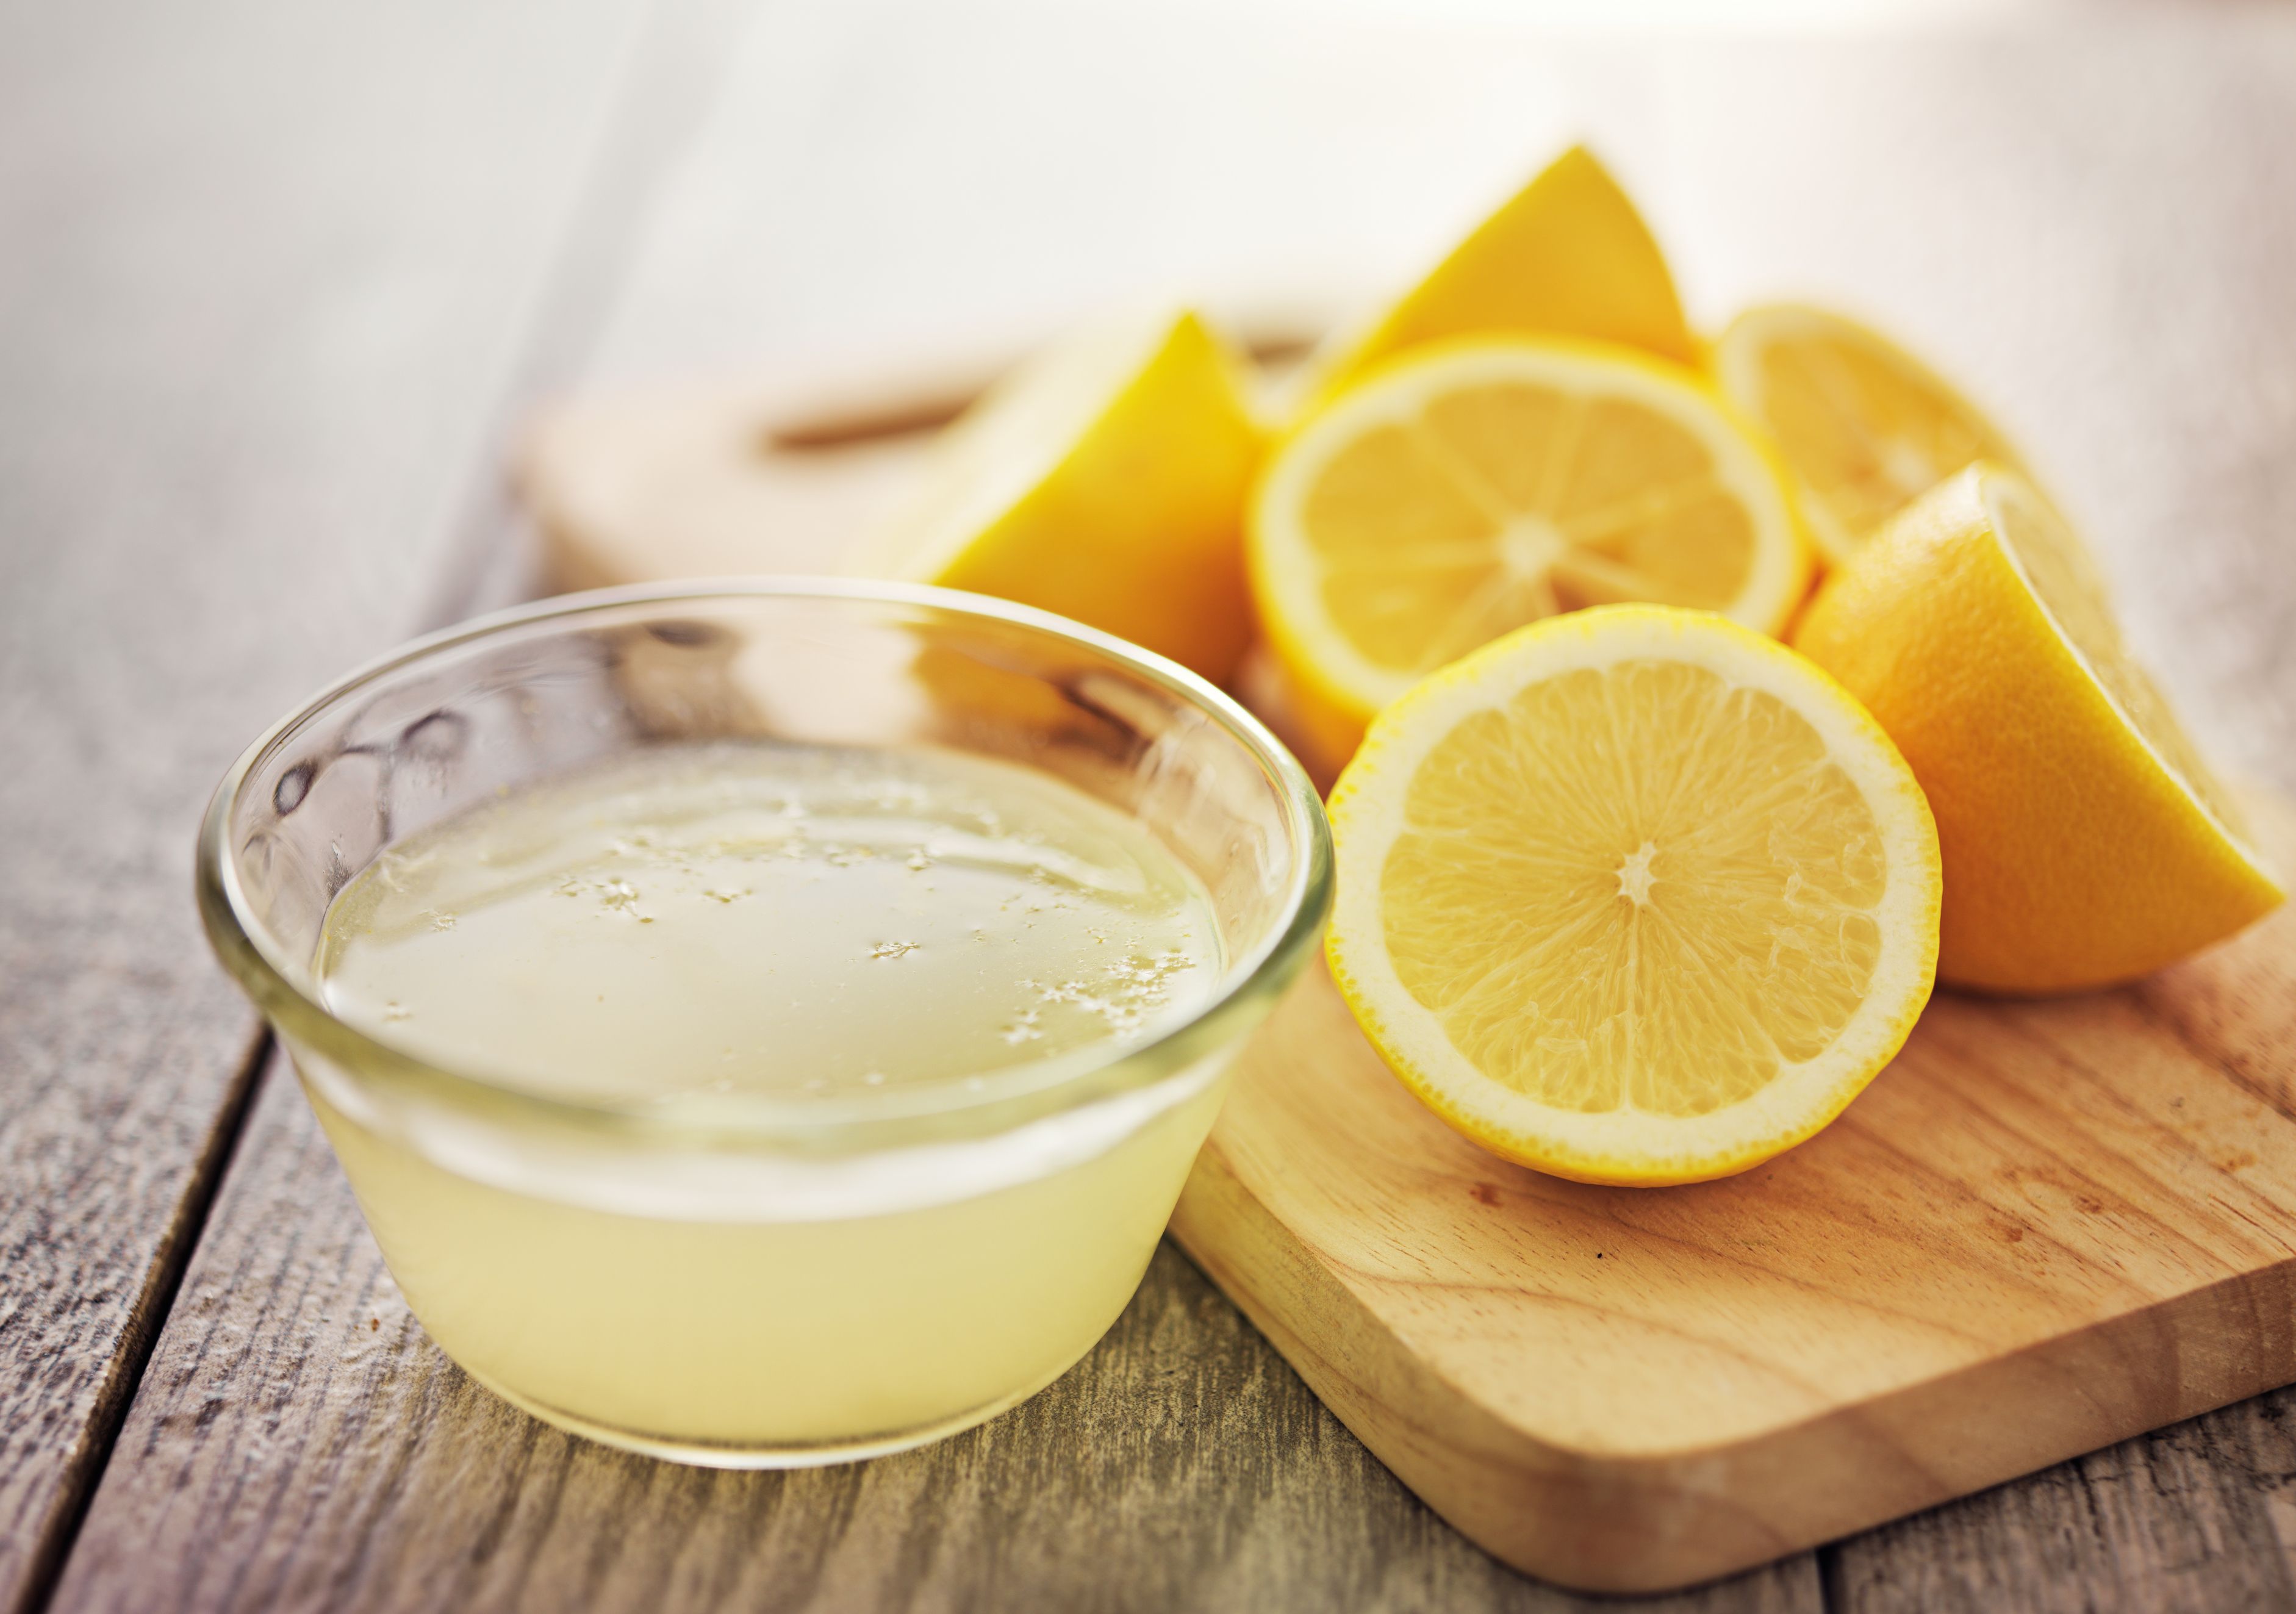 Benefits of lemon for your skin